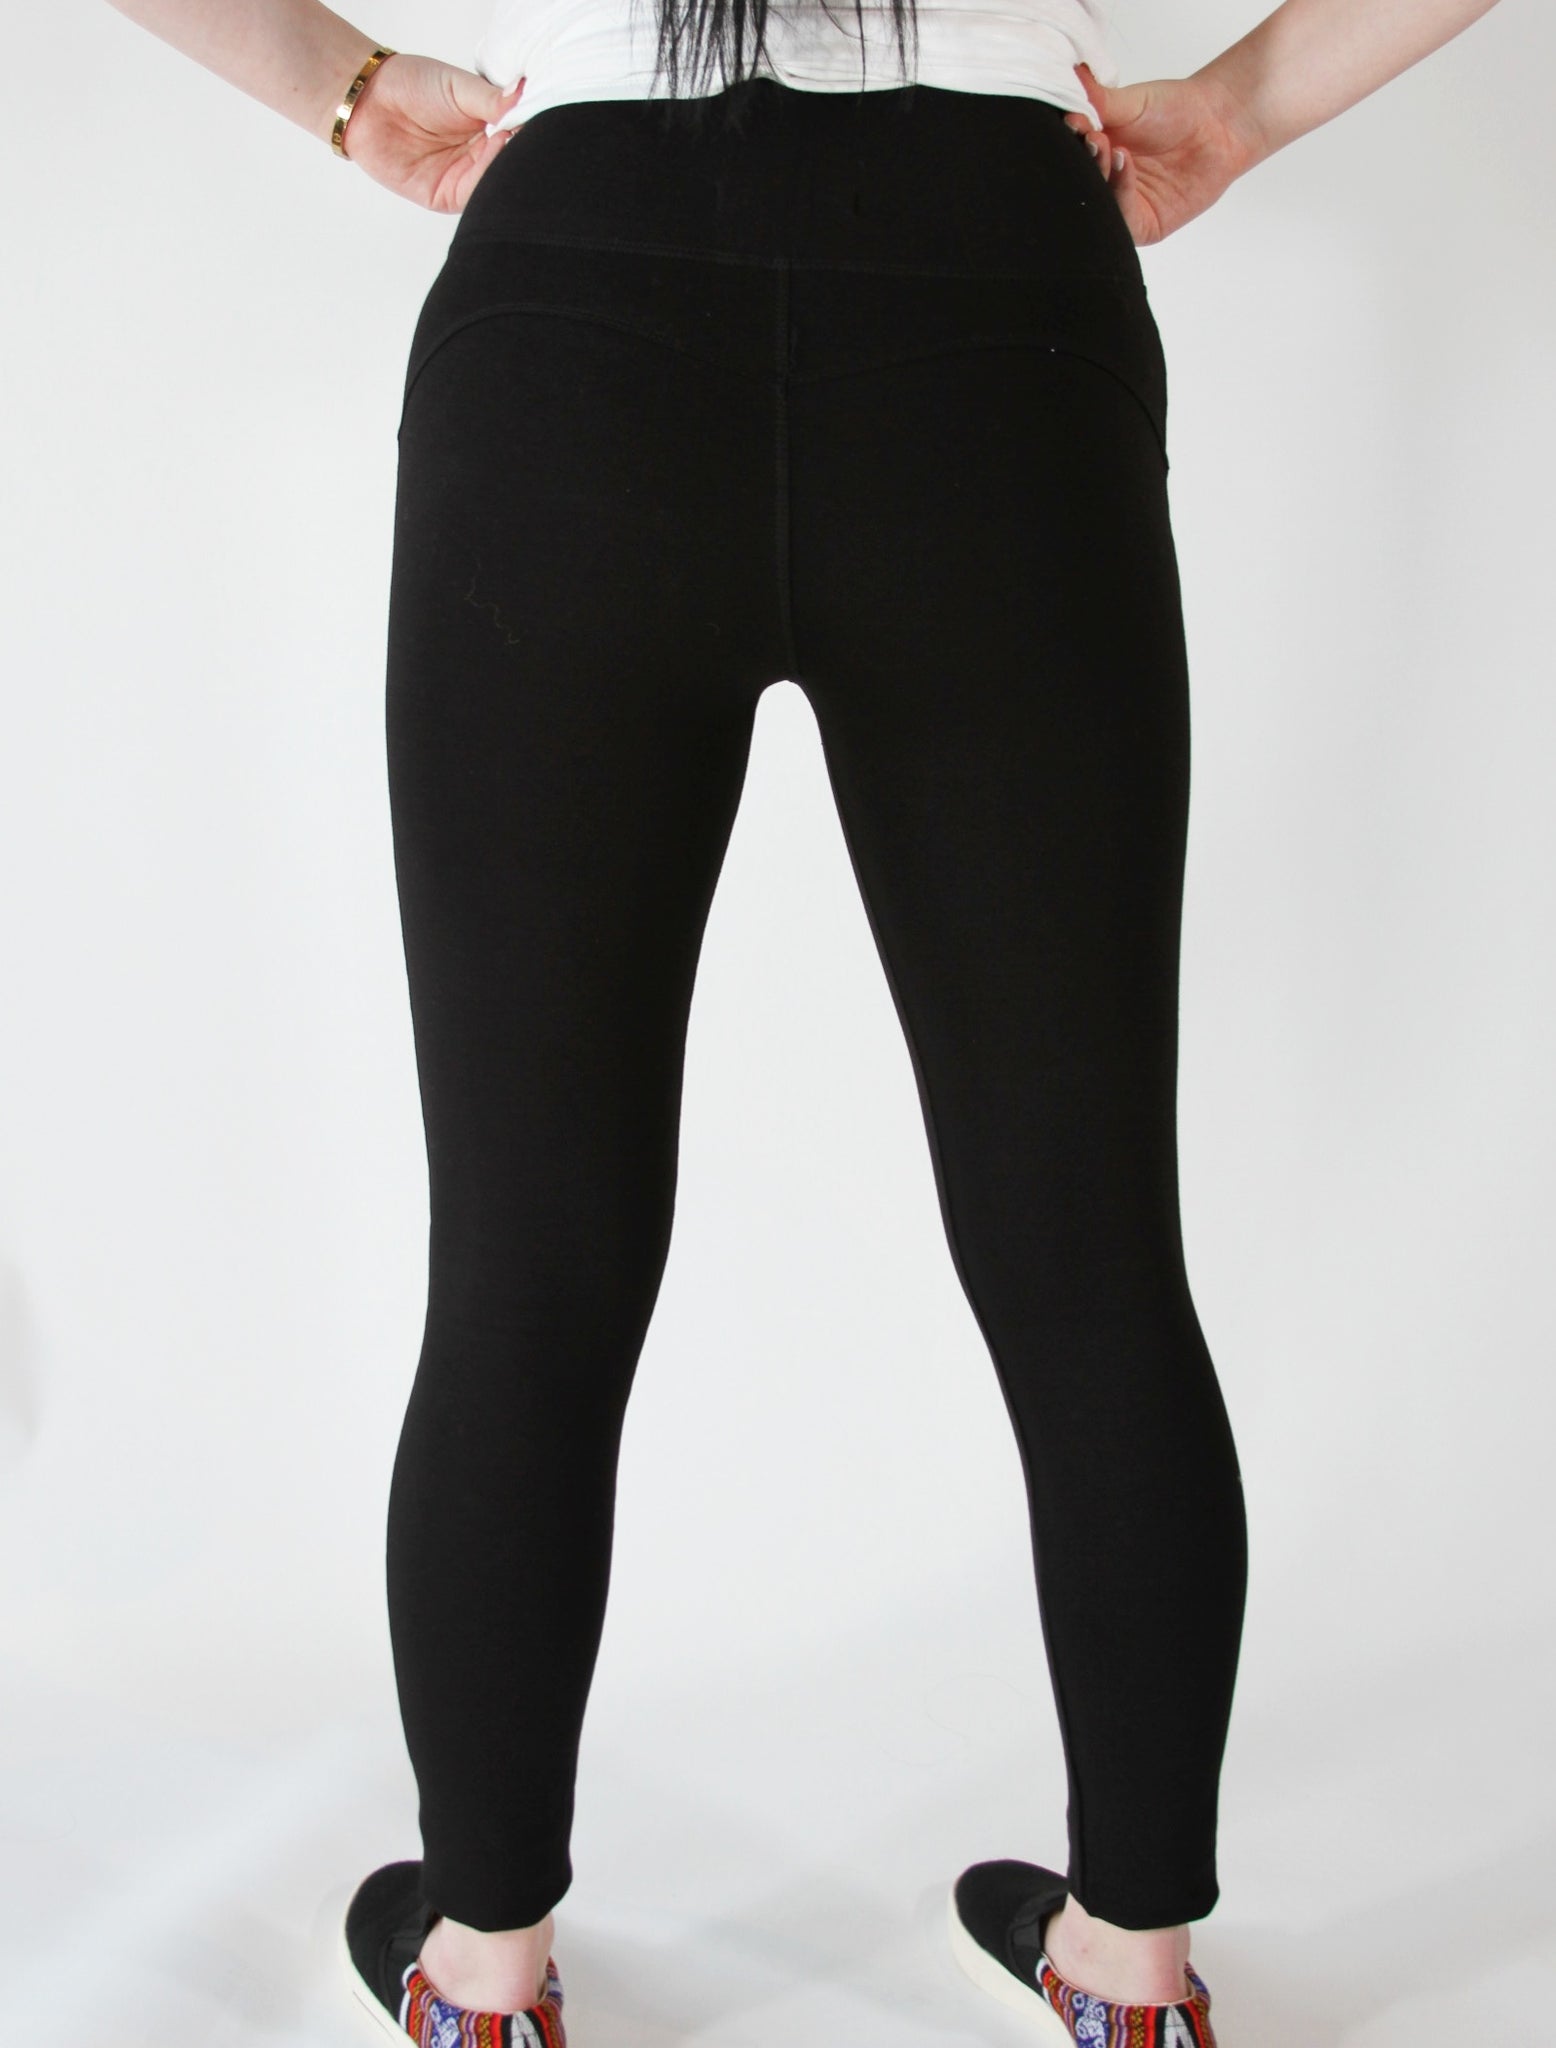 Spanx Ready To Wow! Velvet Leggings in Black Style 2070 Women's Size M